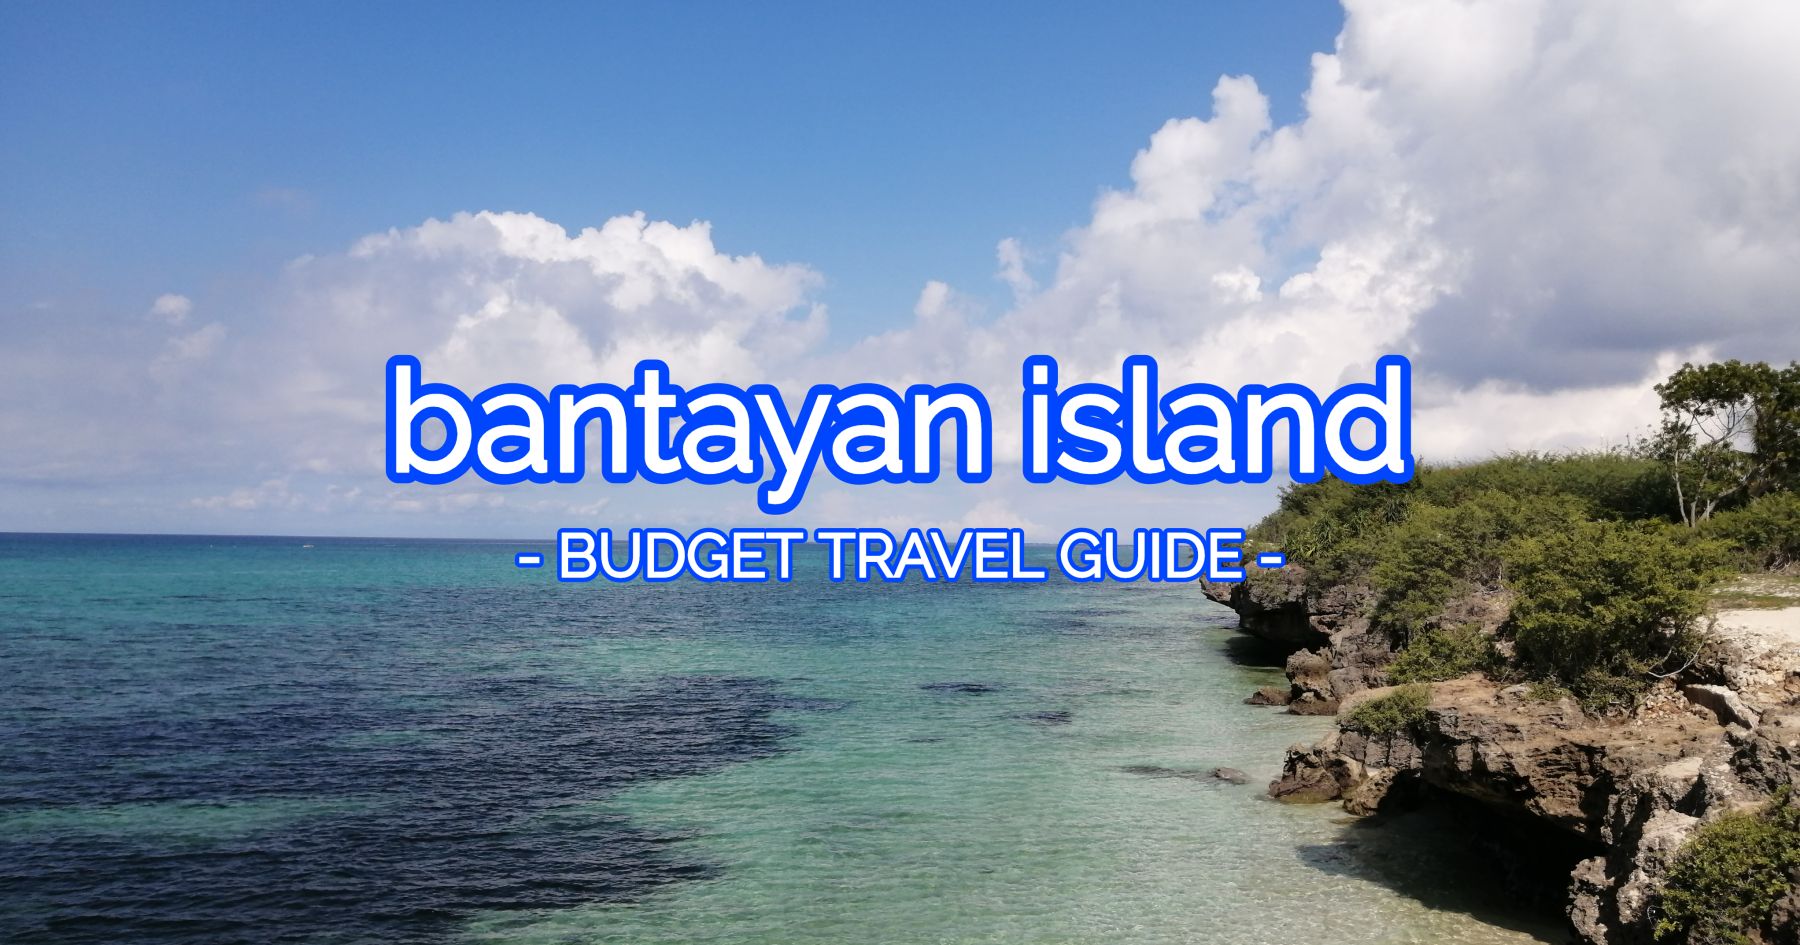 Bantayan Island, Cebu, Philippines